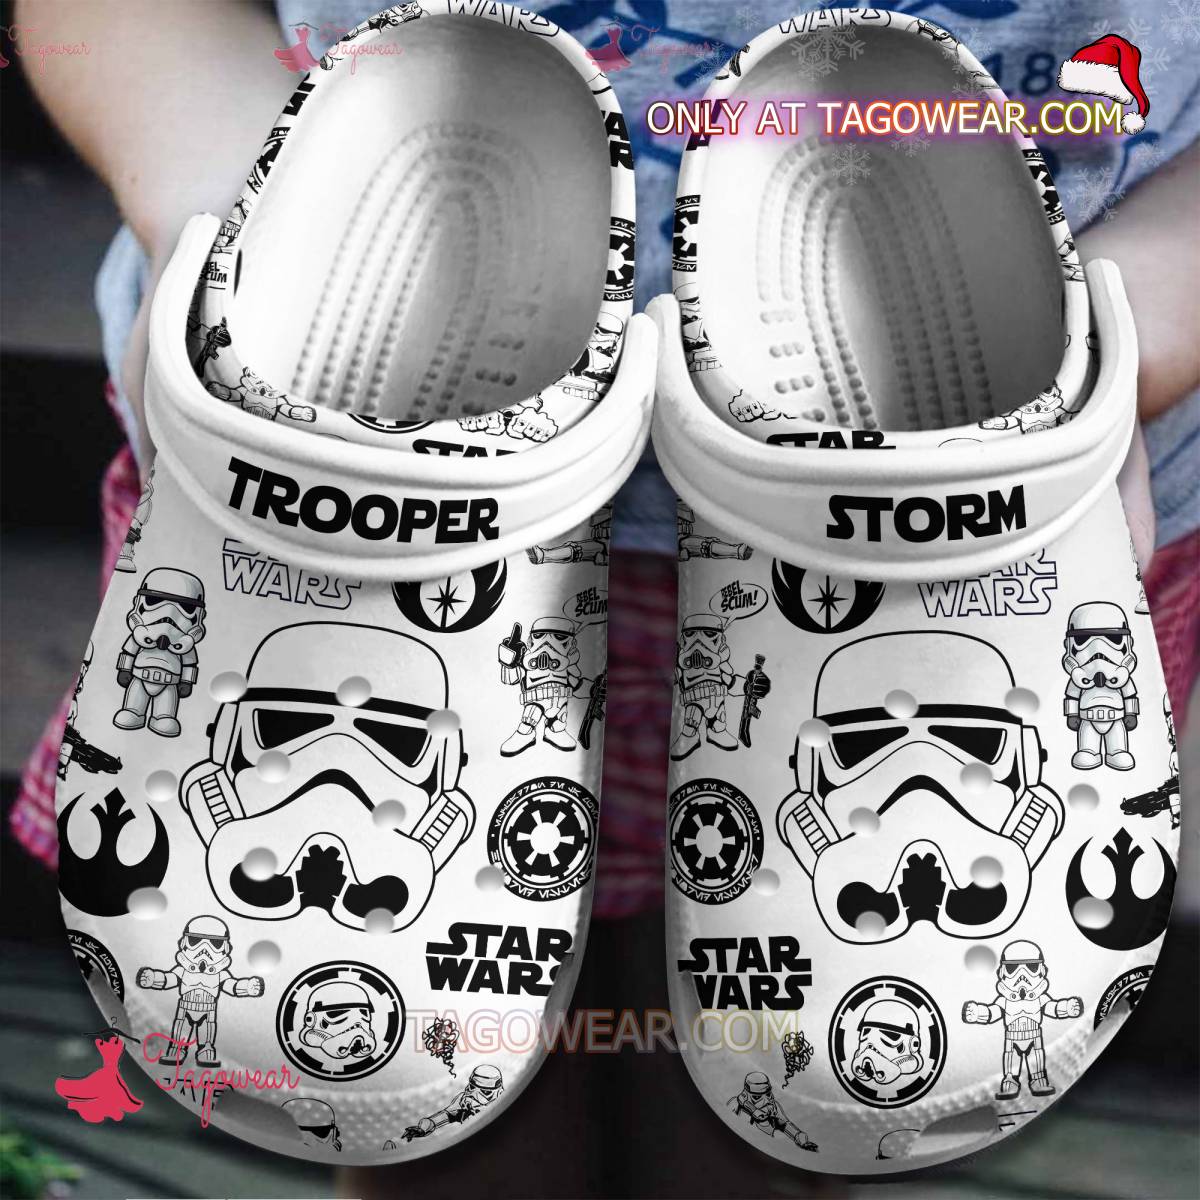 Star Wars Stormtrooper Crocs